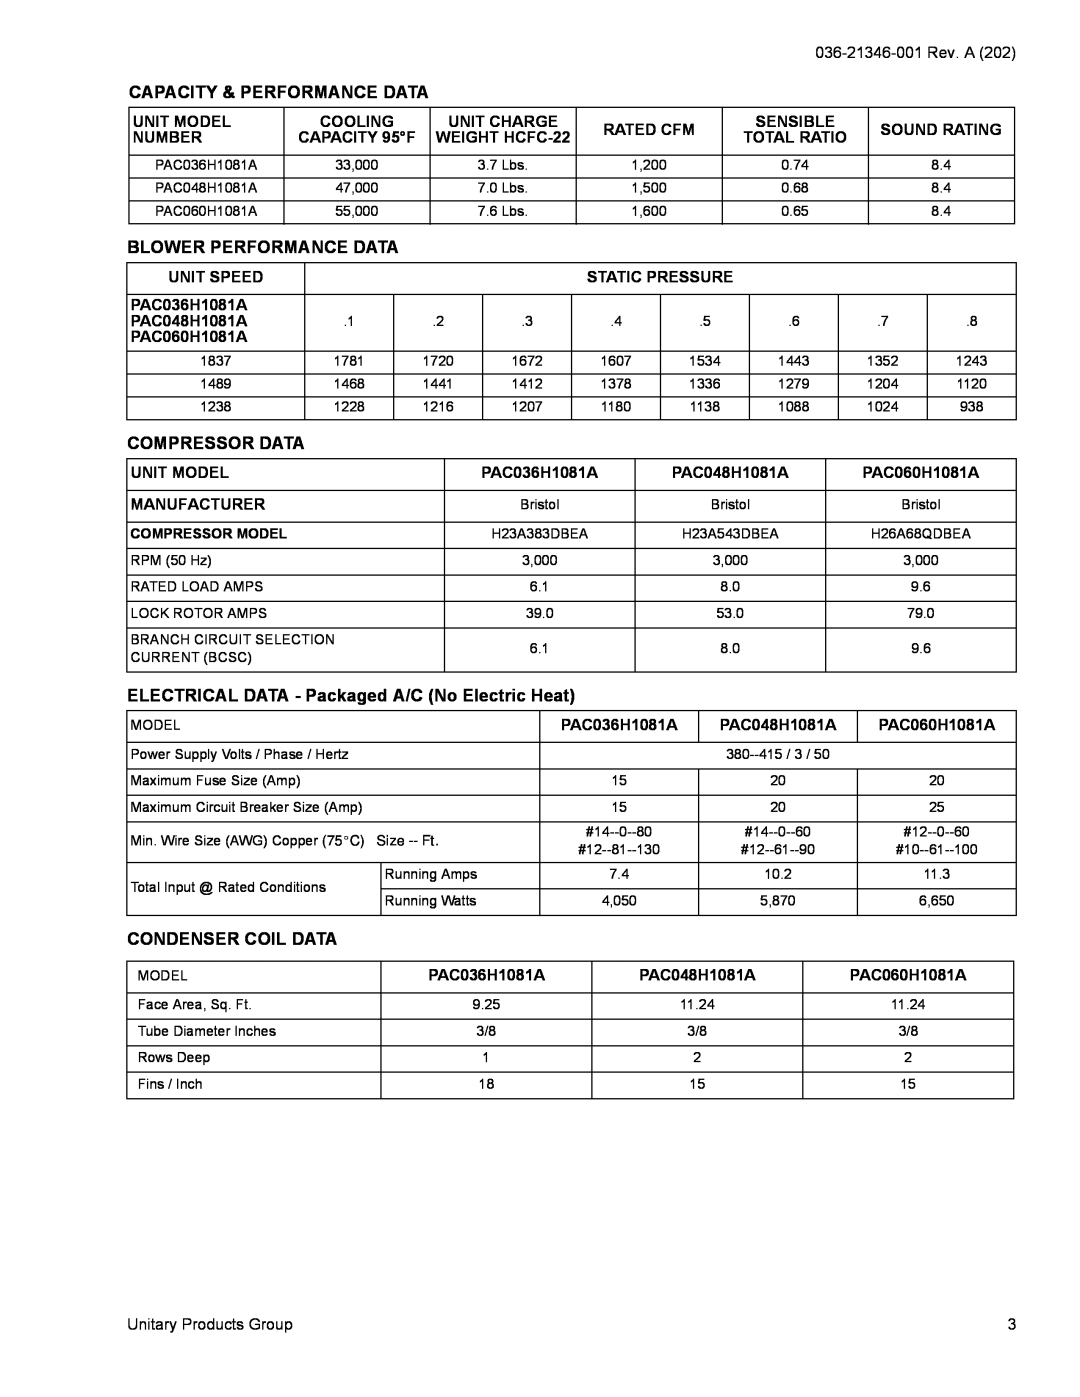 York PAC036 dimensions Capacity & Performance Data, Blower Performance Data, Compressor Data, Condenser Coil Data 